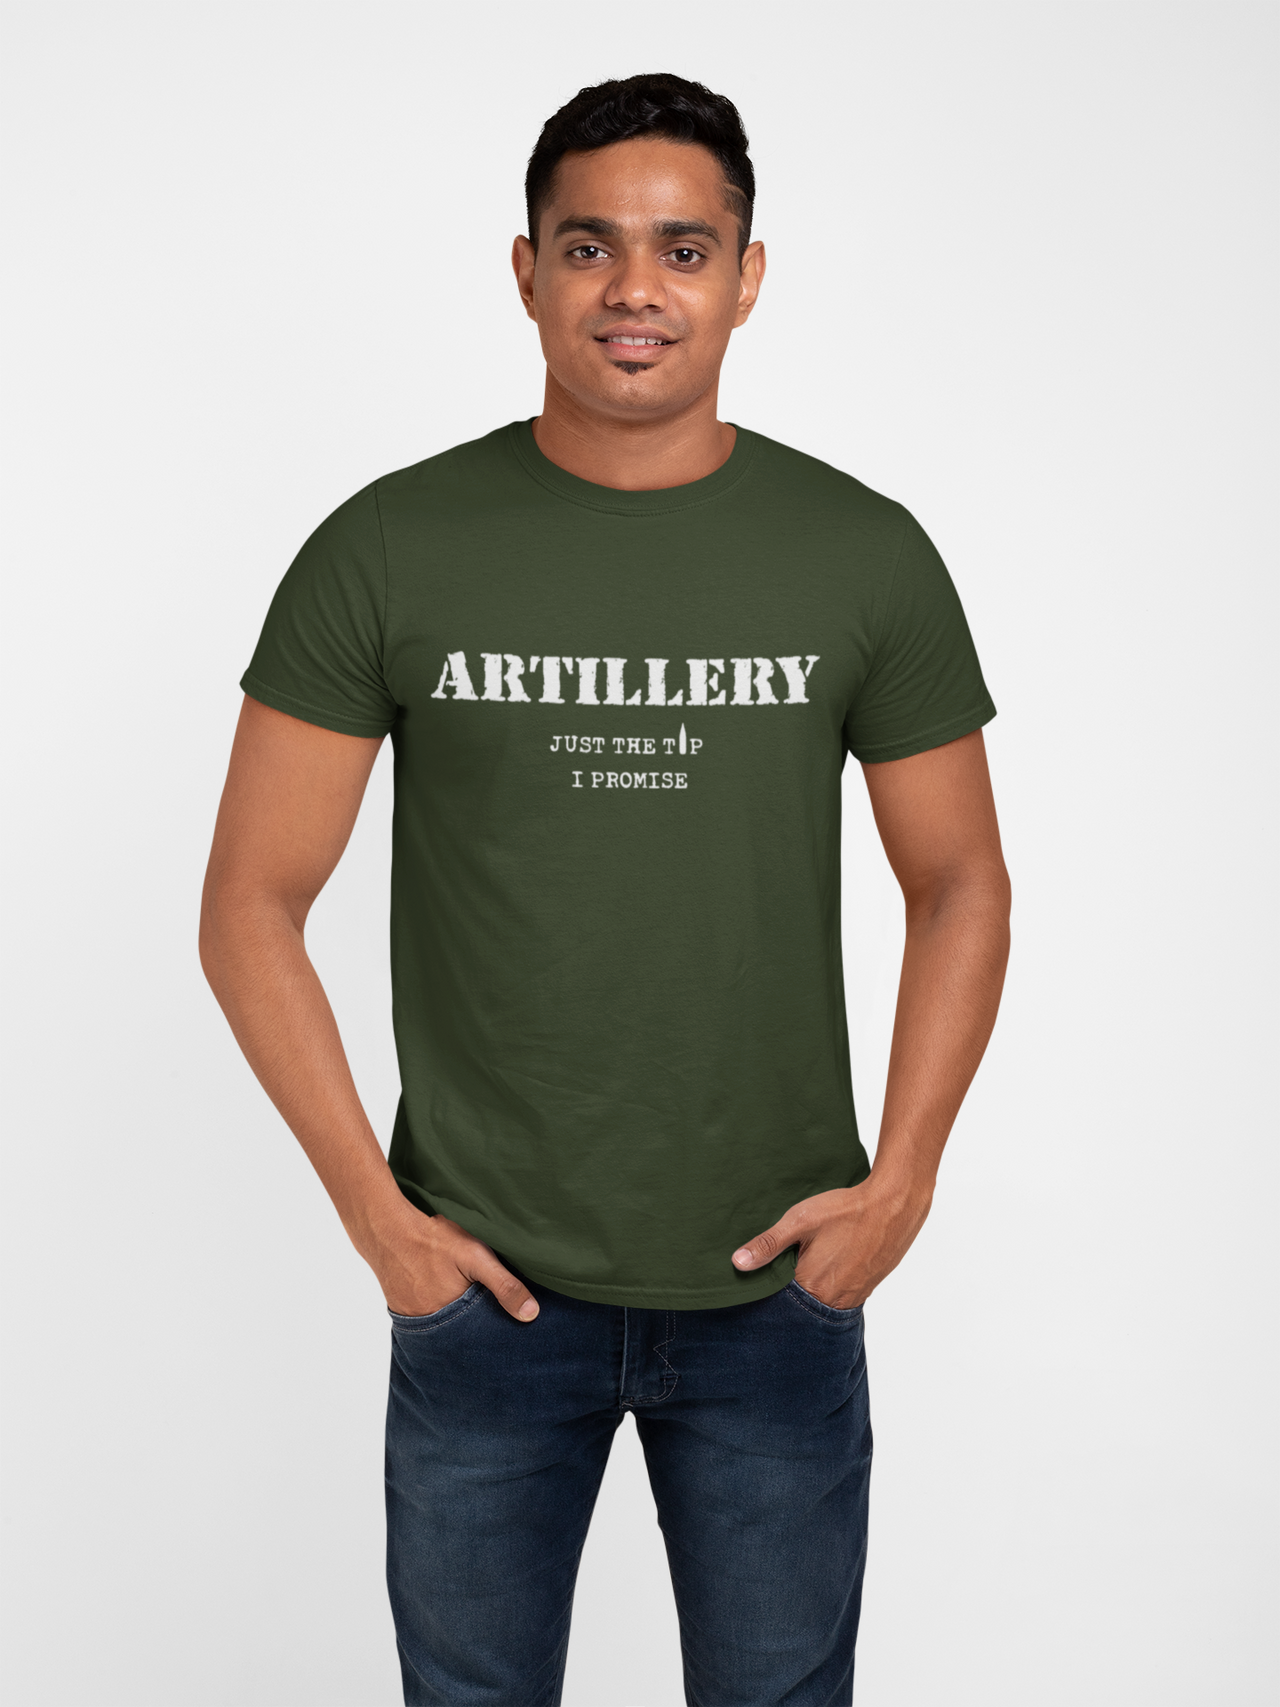 Artillery T-shirt - Just the Tip, I Promise (Men)